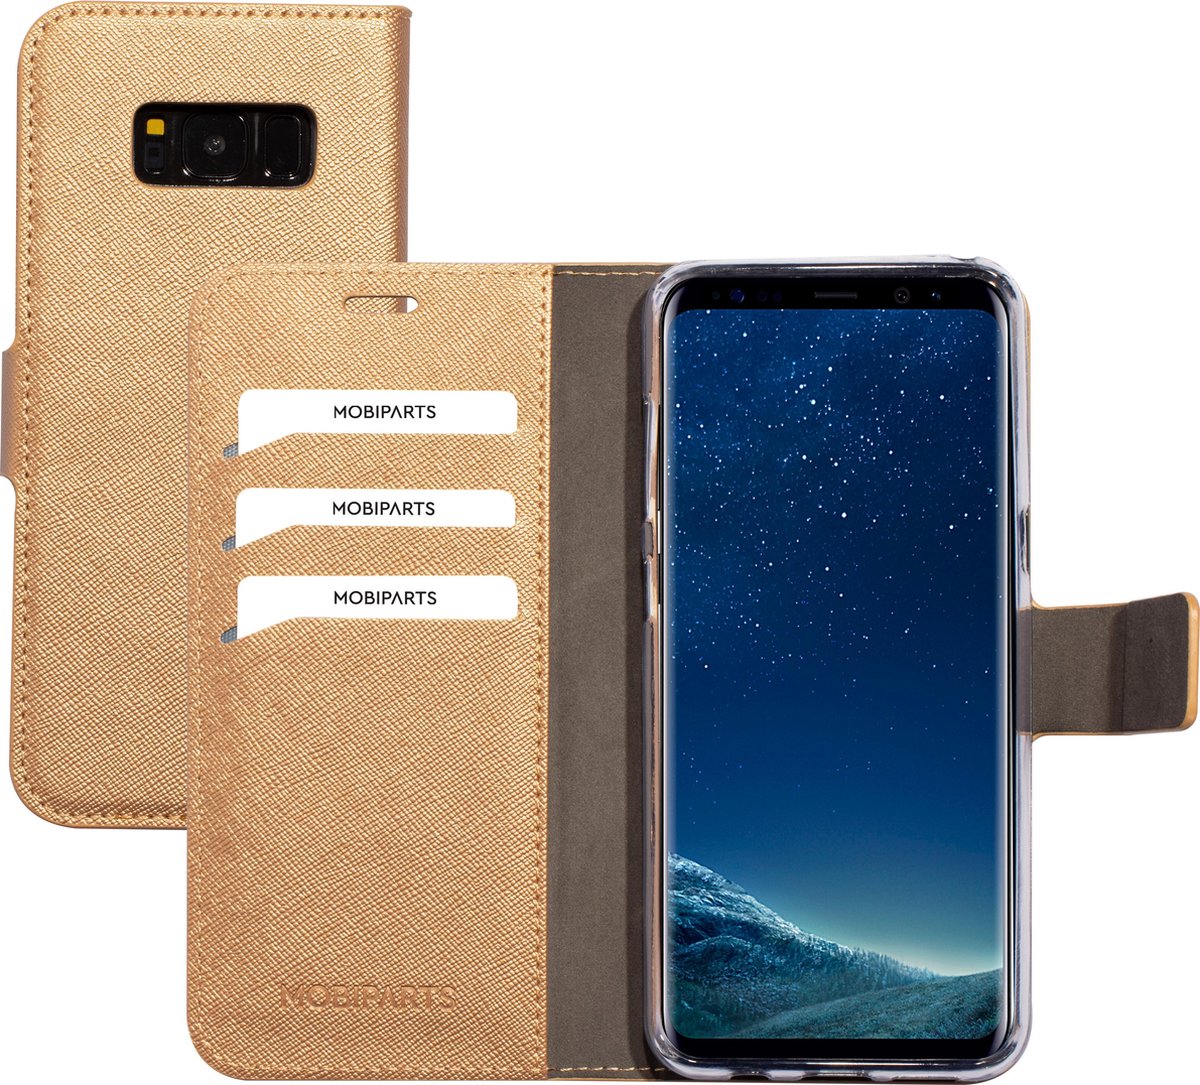 Samsung Galaxy S8 Hoesje - Saffiano Wallet/Portemonnee hoesje - Magneet Sluiting - 3 Opbergvakken - Bruin Koper - Mobiparts